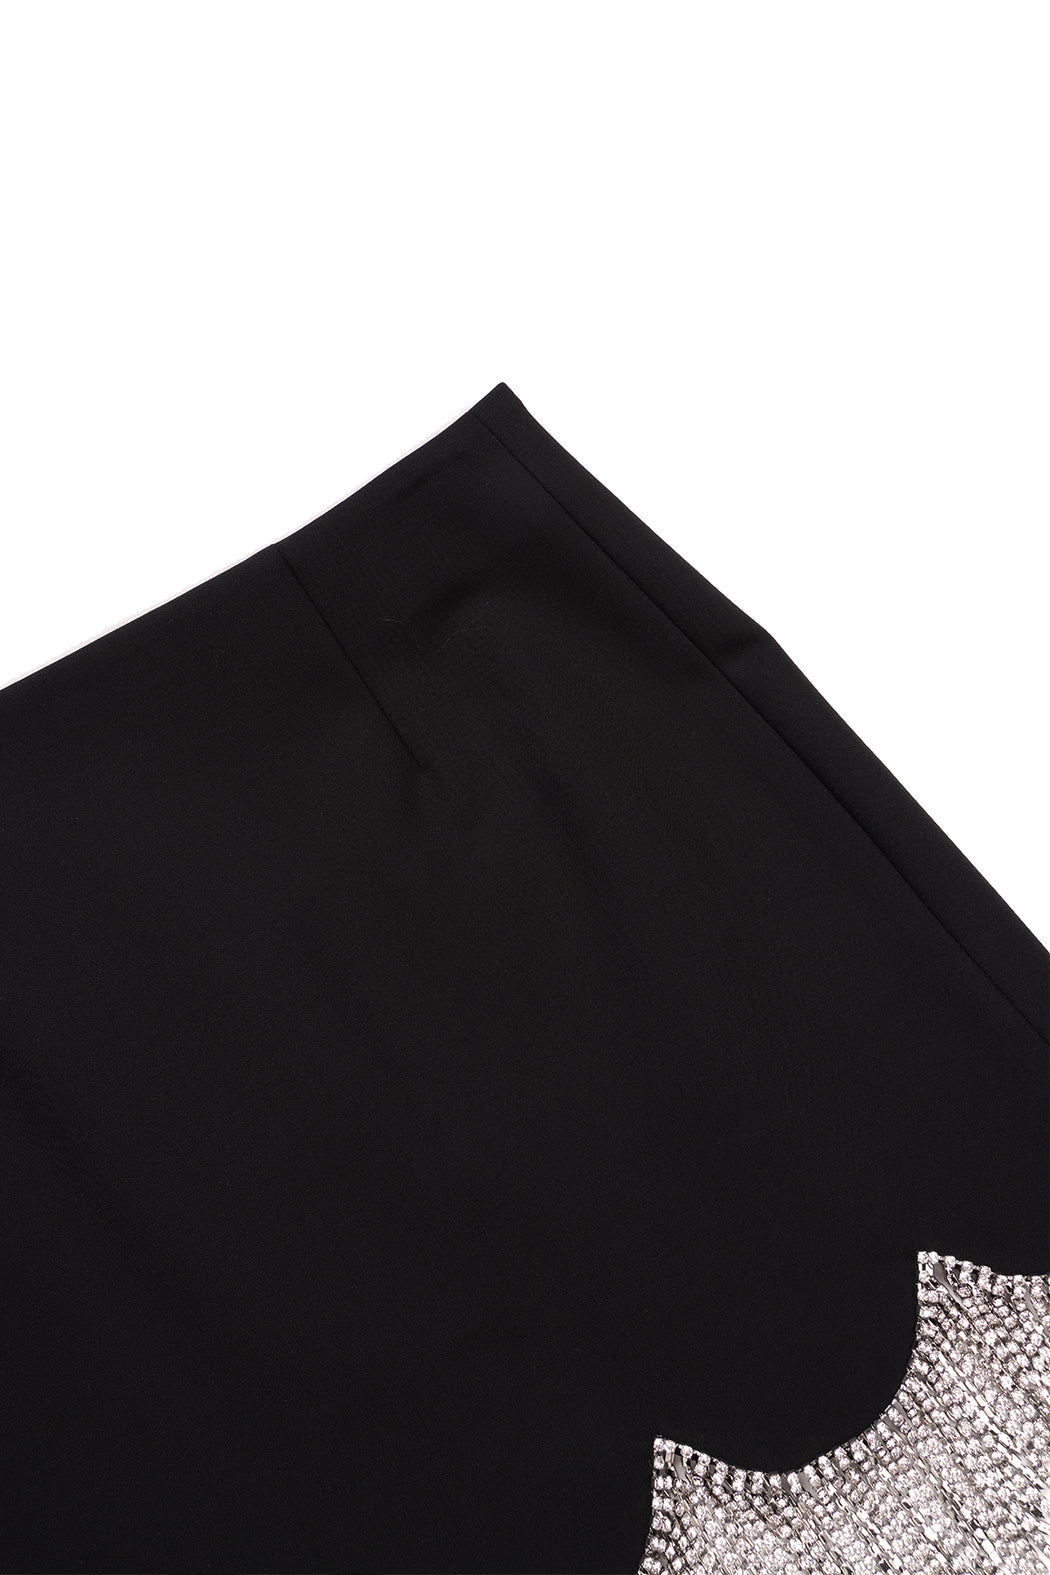 Mini Skirt with Scalloped Crystal Hem - Black